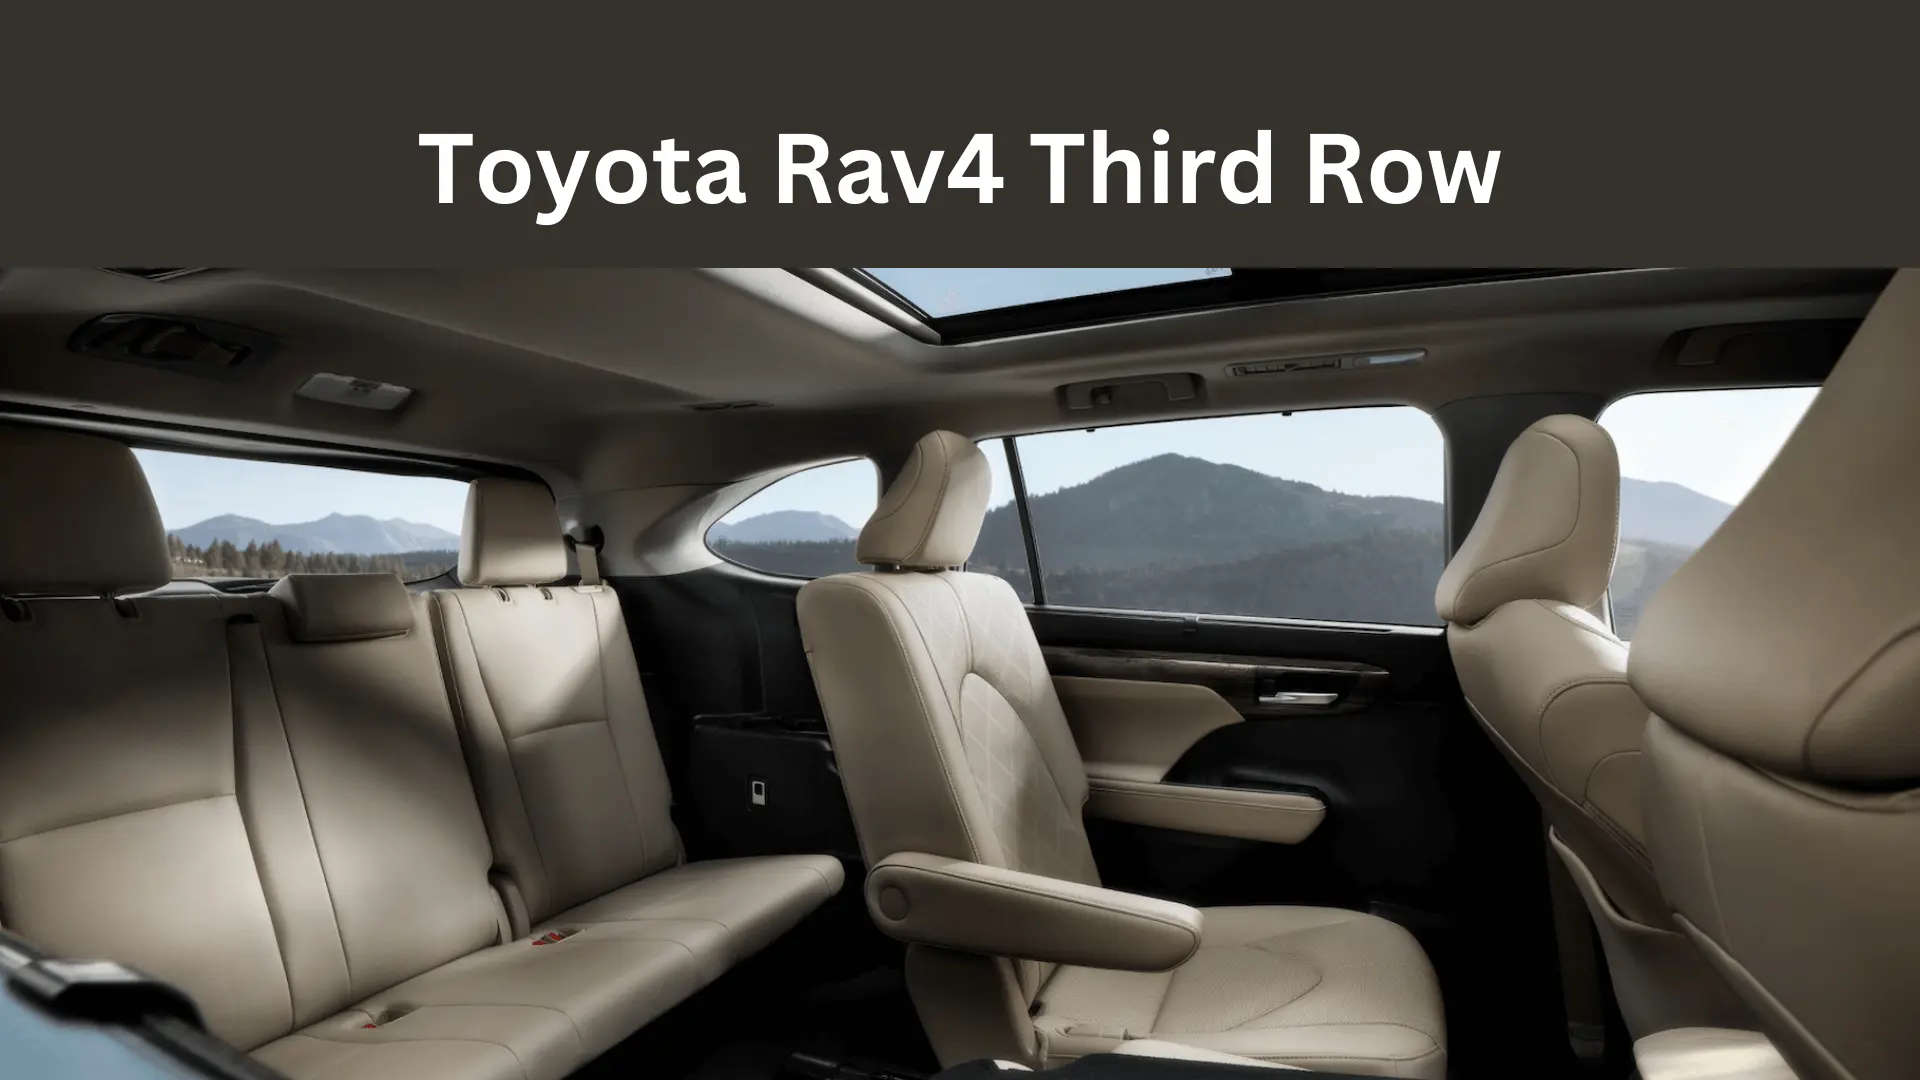 Toyota Rav4 Third Row